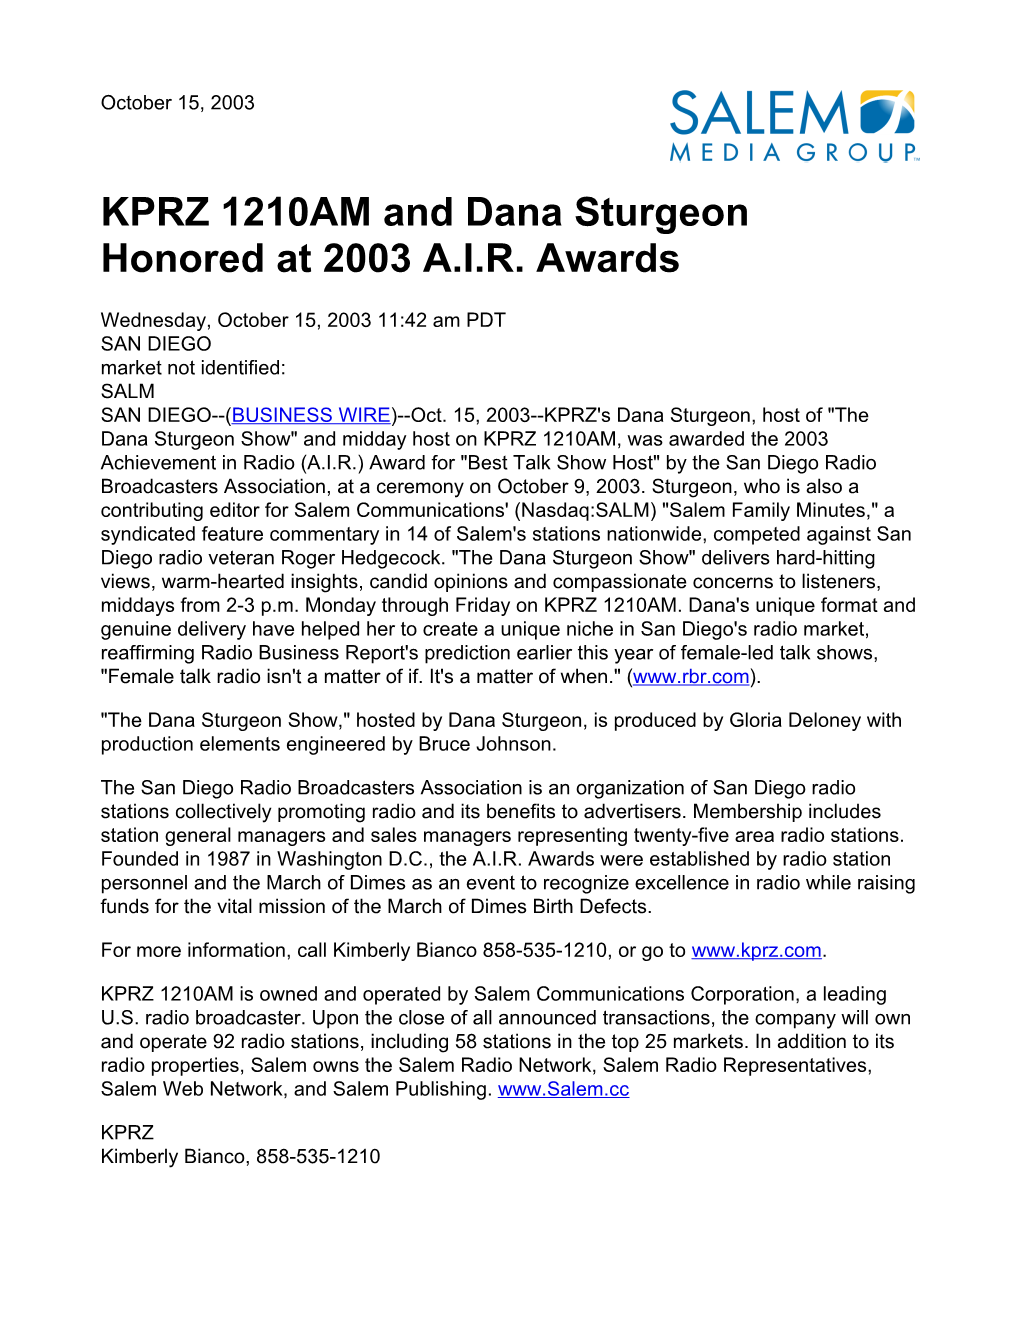 KPRZ 1210AM and Dana Sturgeon Honored at 2003 A.I.R. Awards